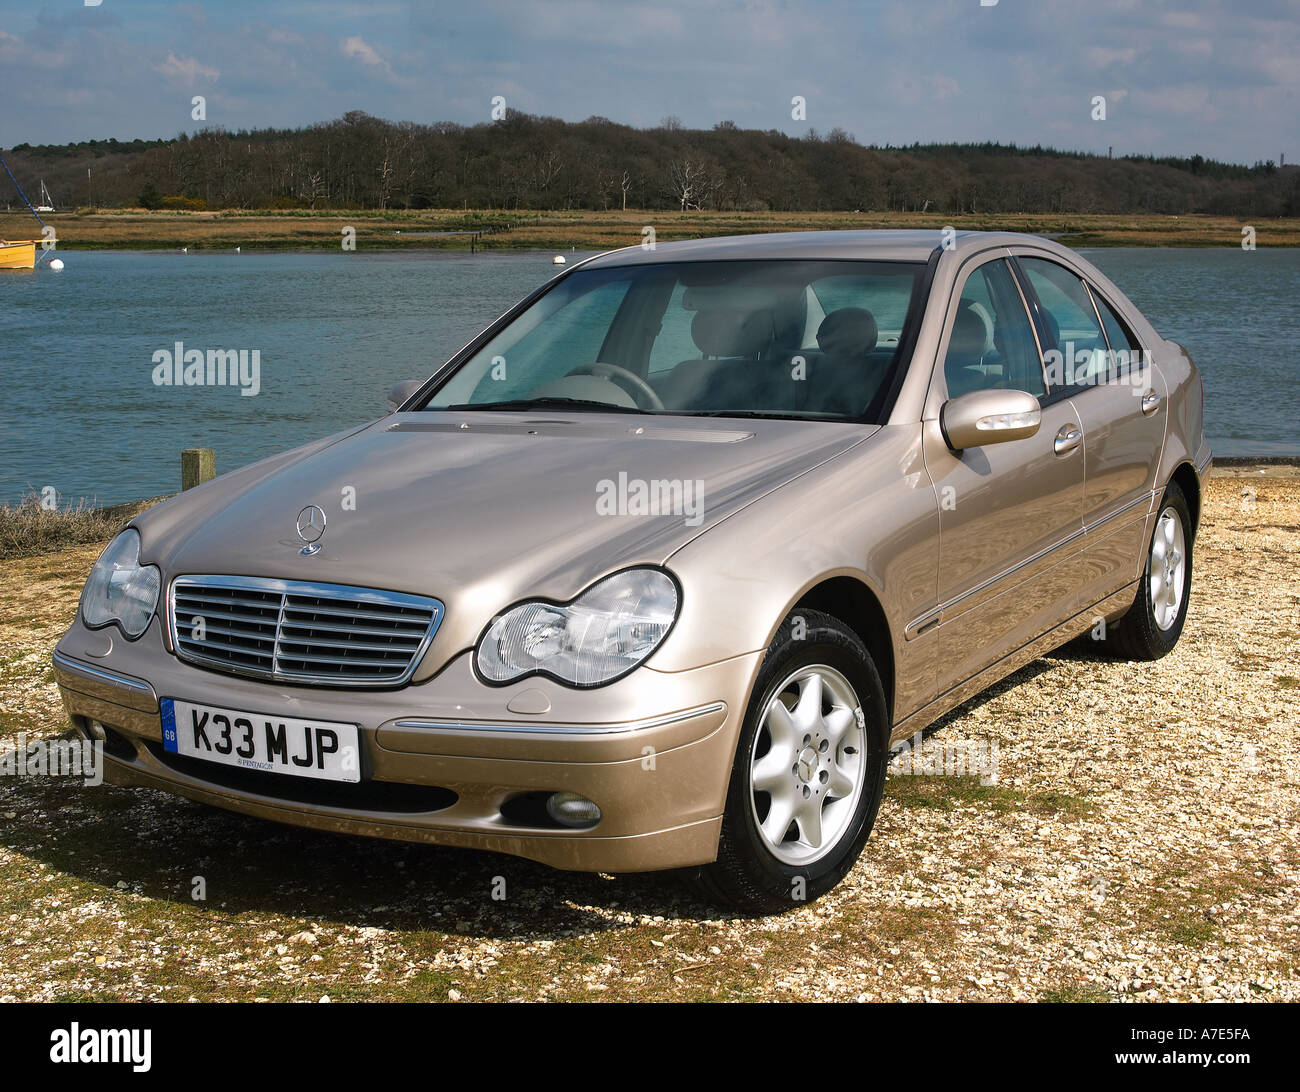 2002 Mercedes Benz C220 cdi Stock Photo - Alamy